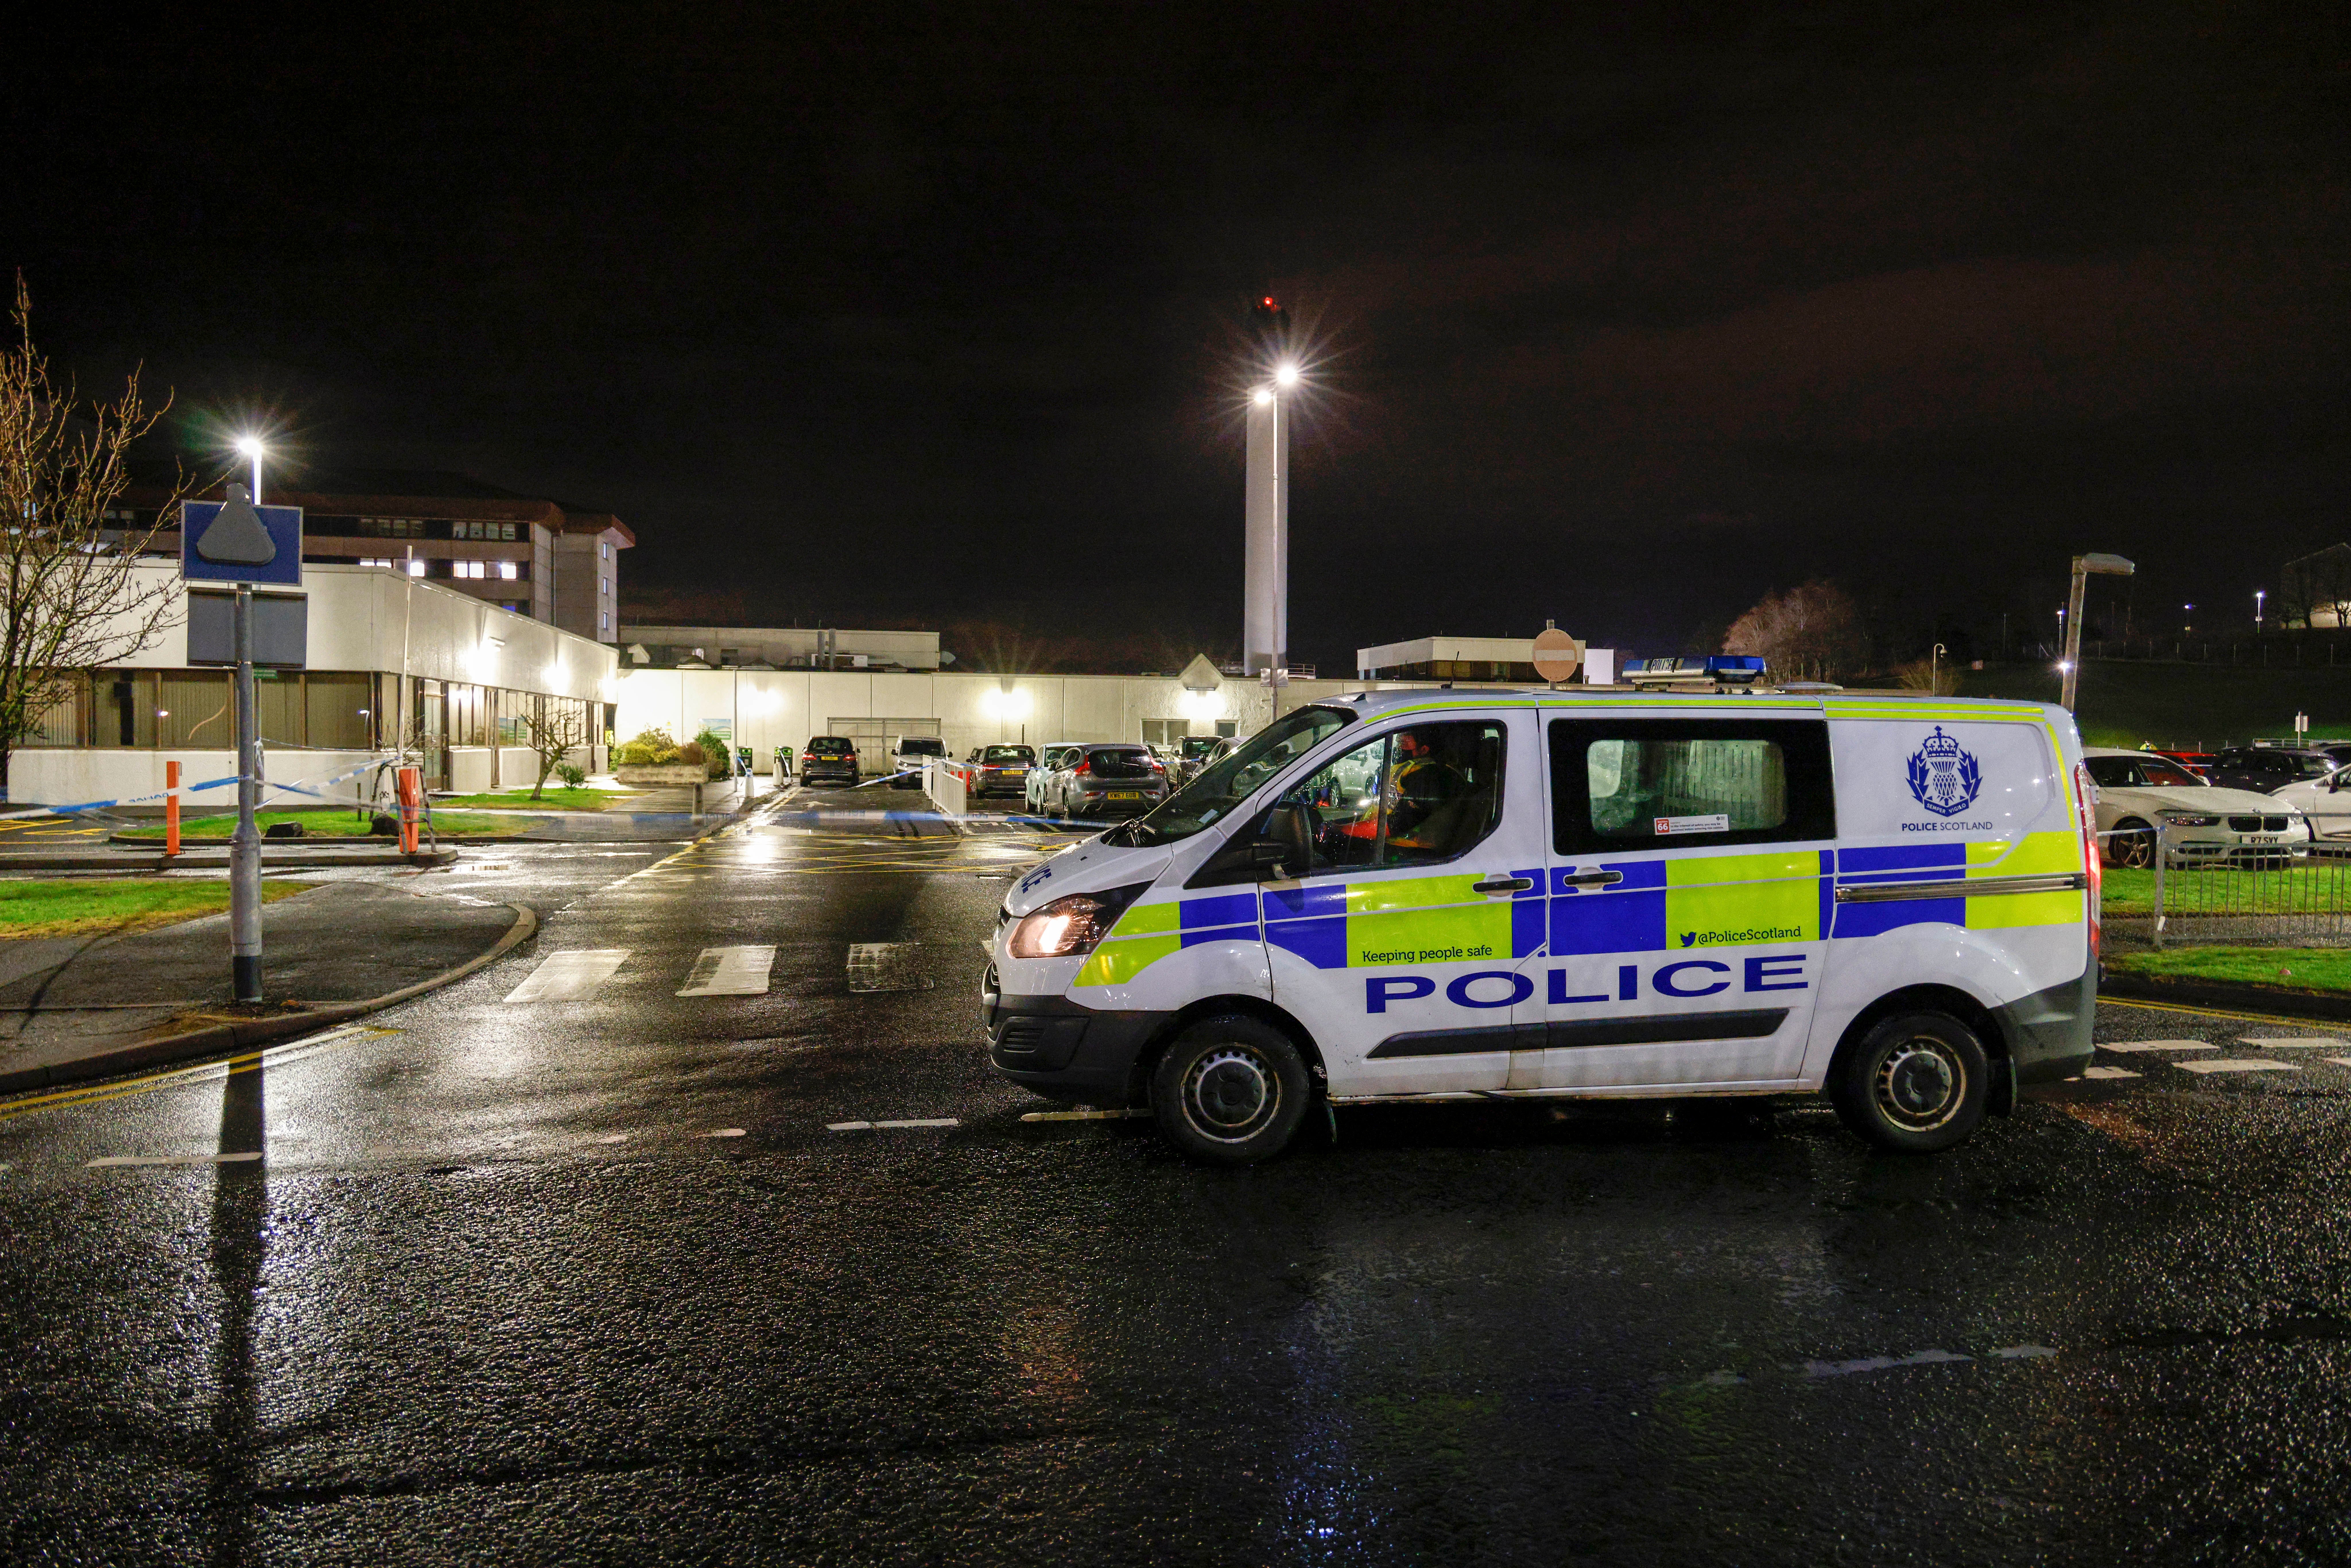 Police investigate a stabbing University Hospital Crosshouse in Kilmarnock, East Ayrshire, Scotland.